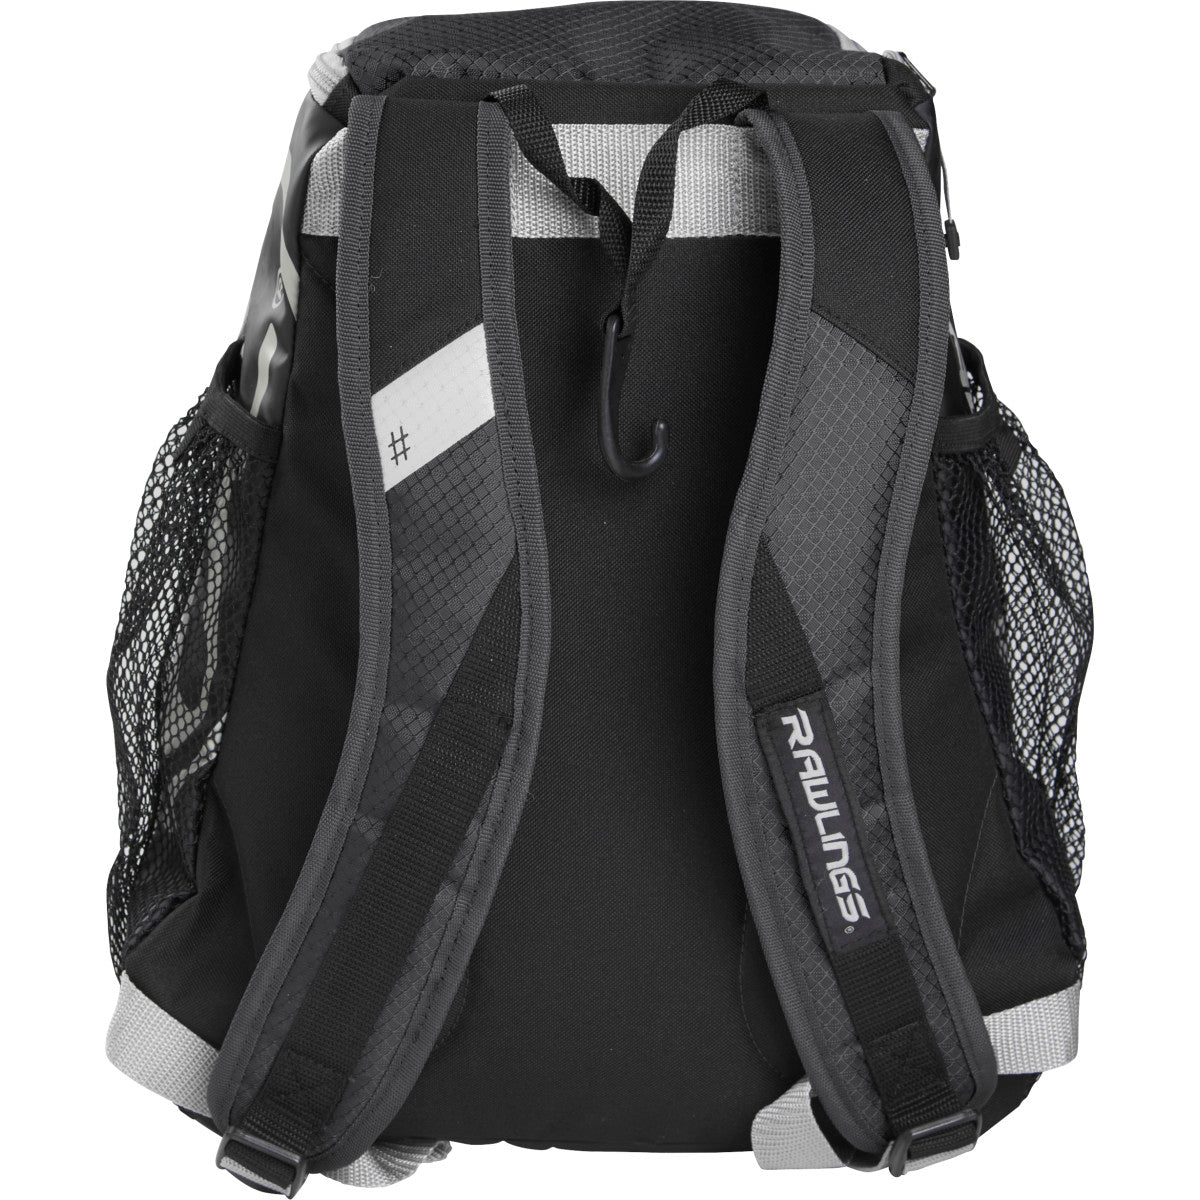 rawlings-r400-youth-backpack